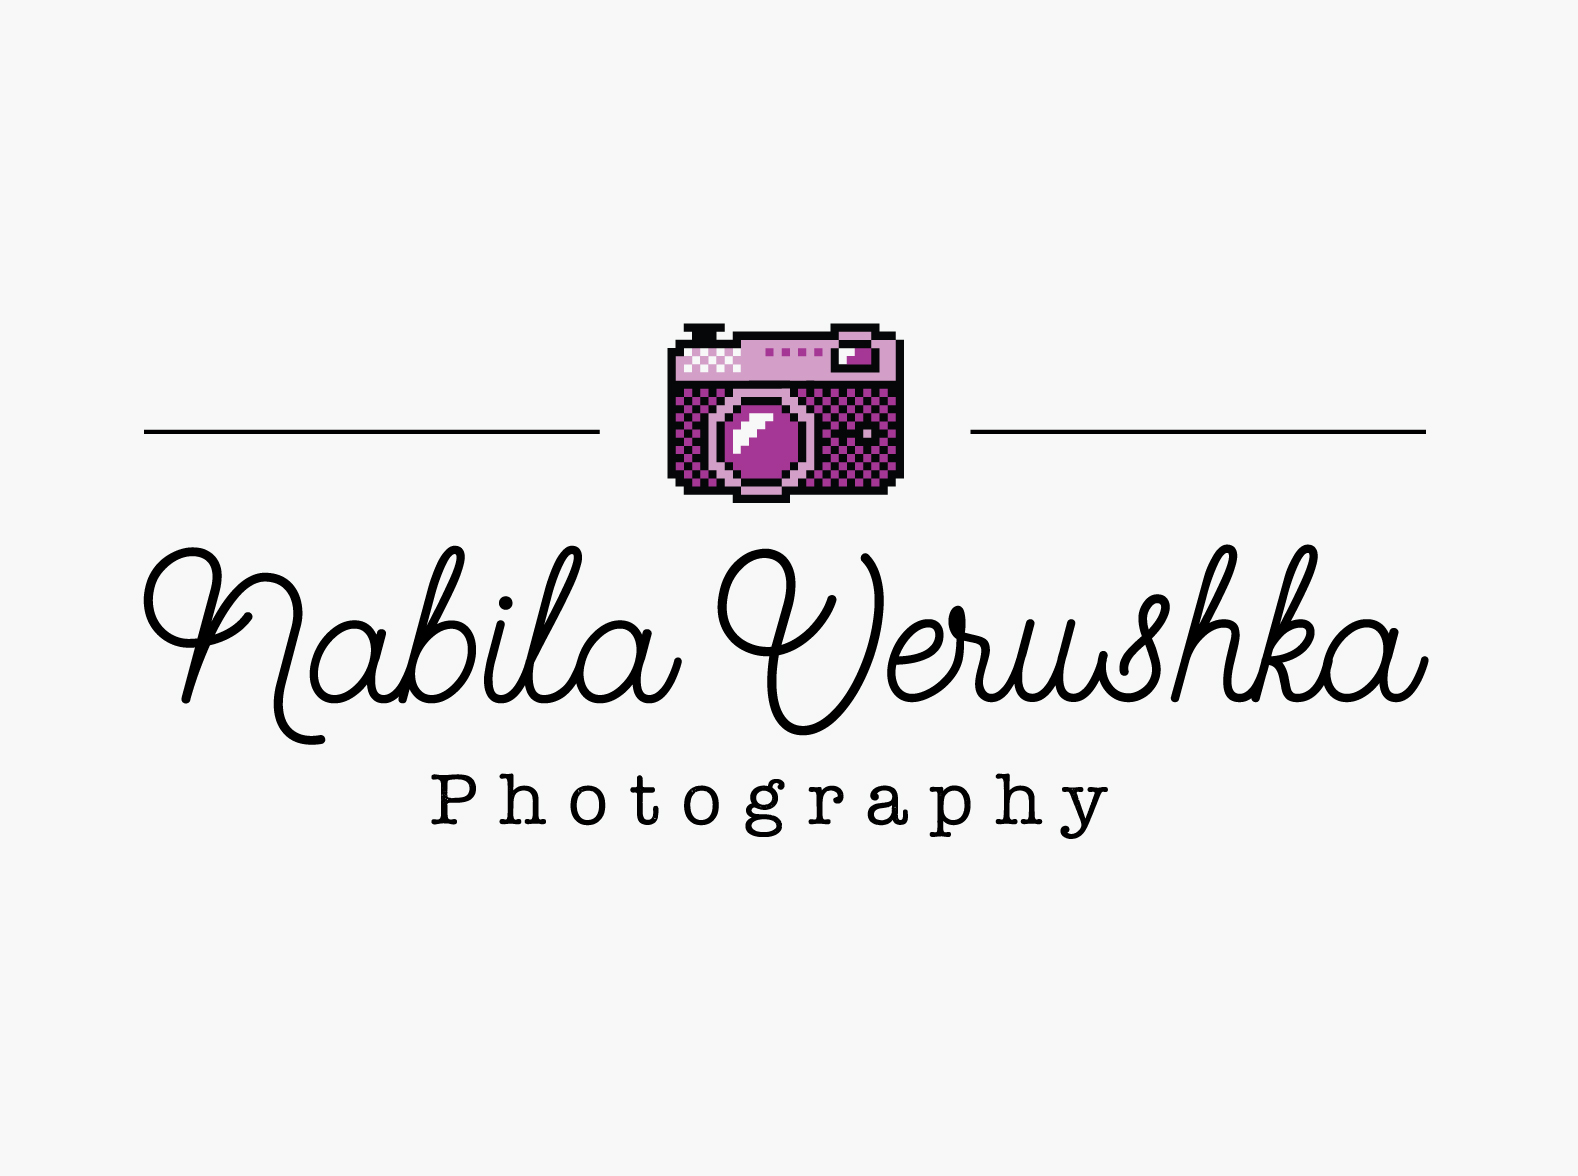 Nabila Verushka photographer 8bit logo design